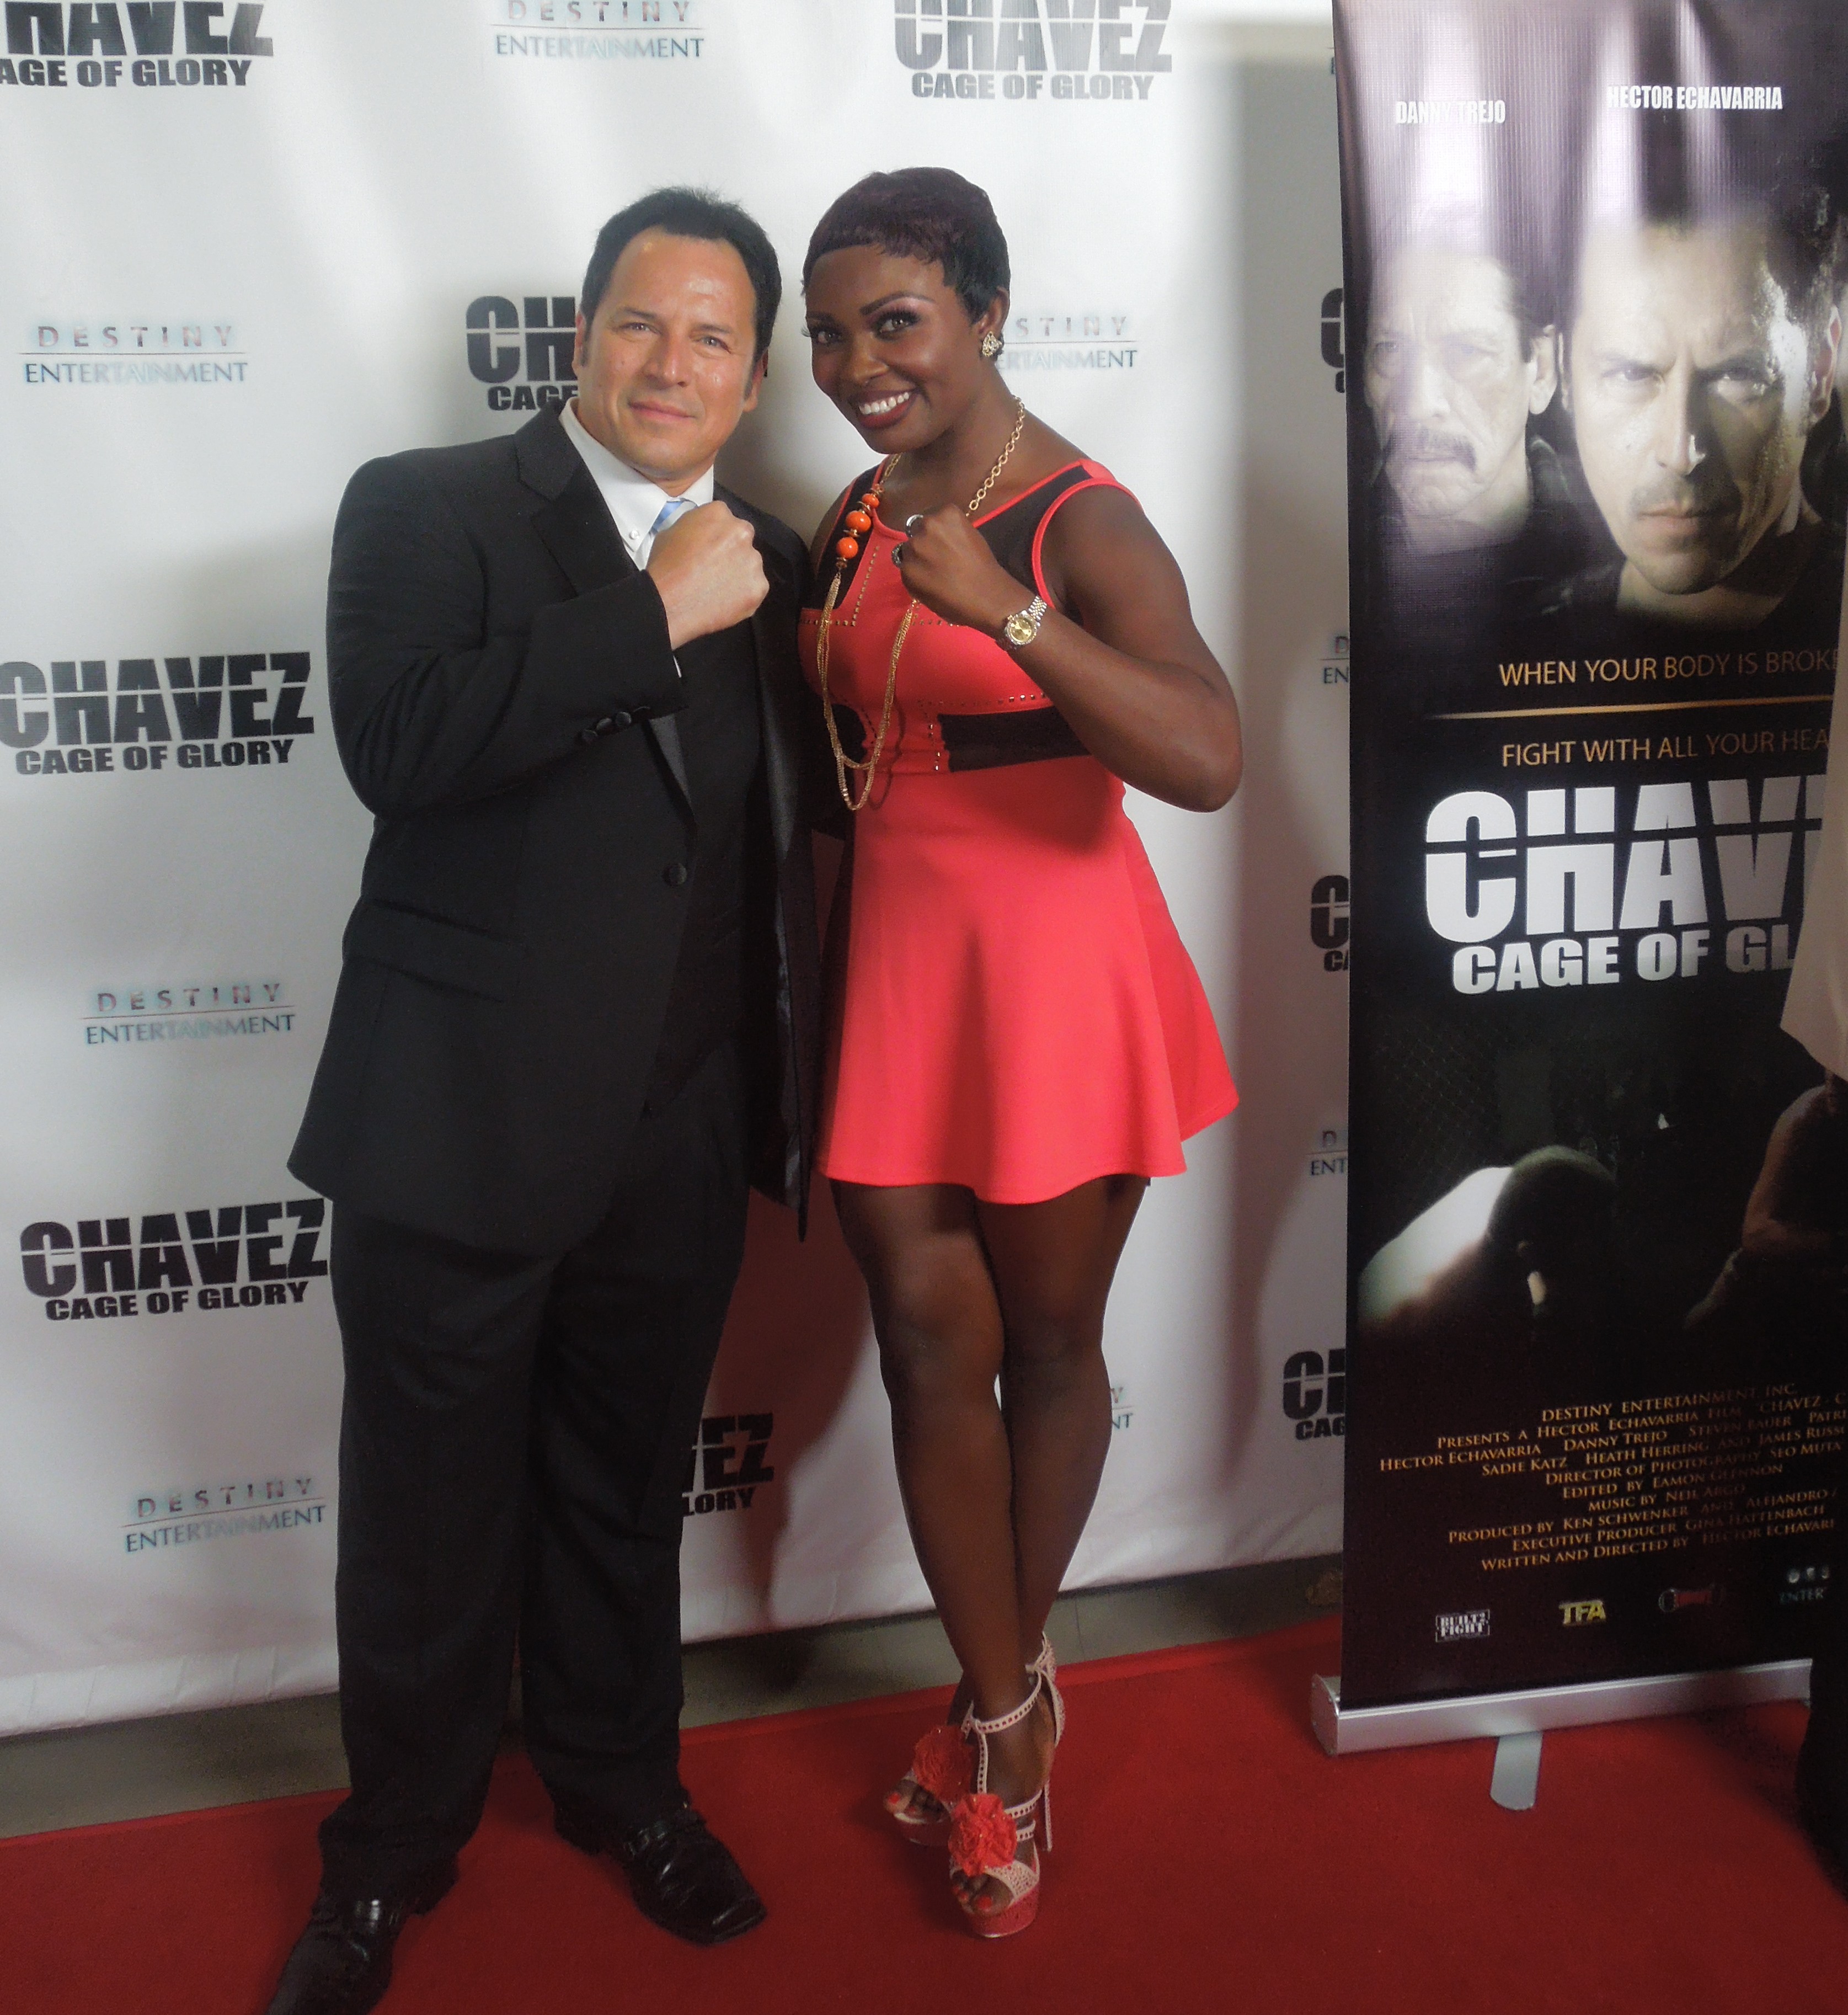 Hector Echavaria & Jennifer Oguzie @ the World Premier of Chavez Cage of Glory